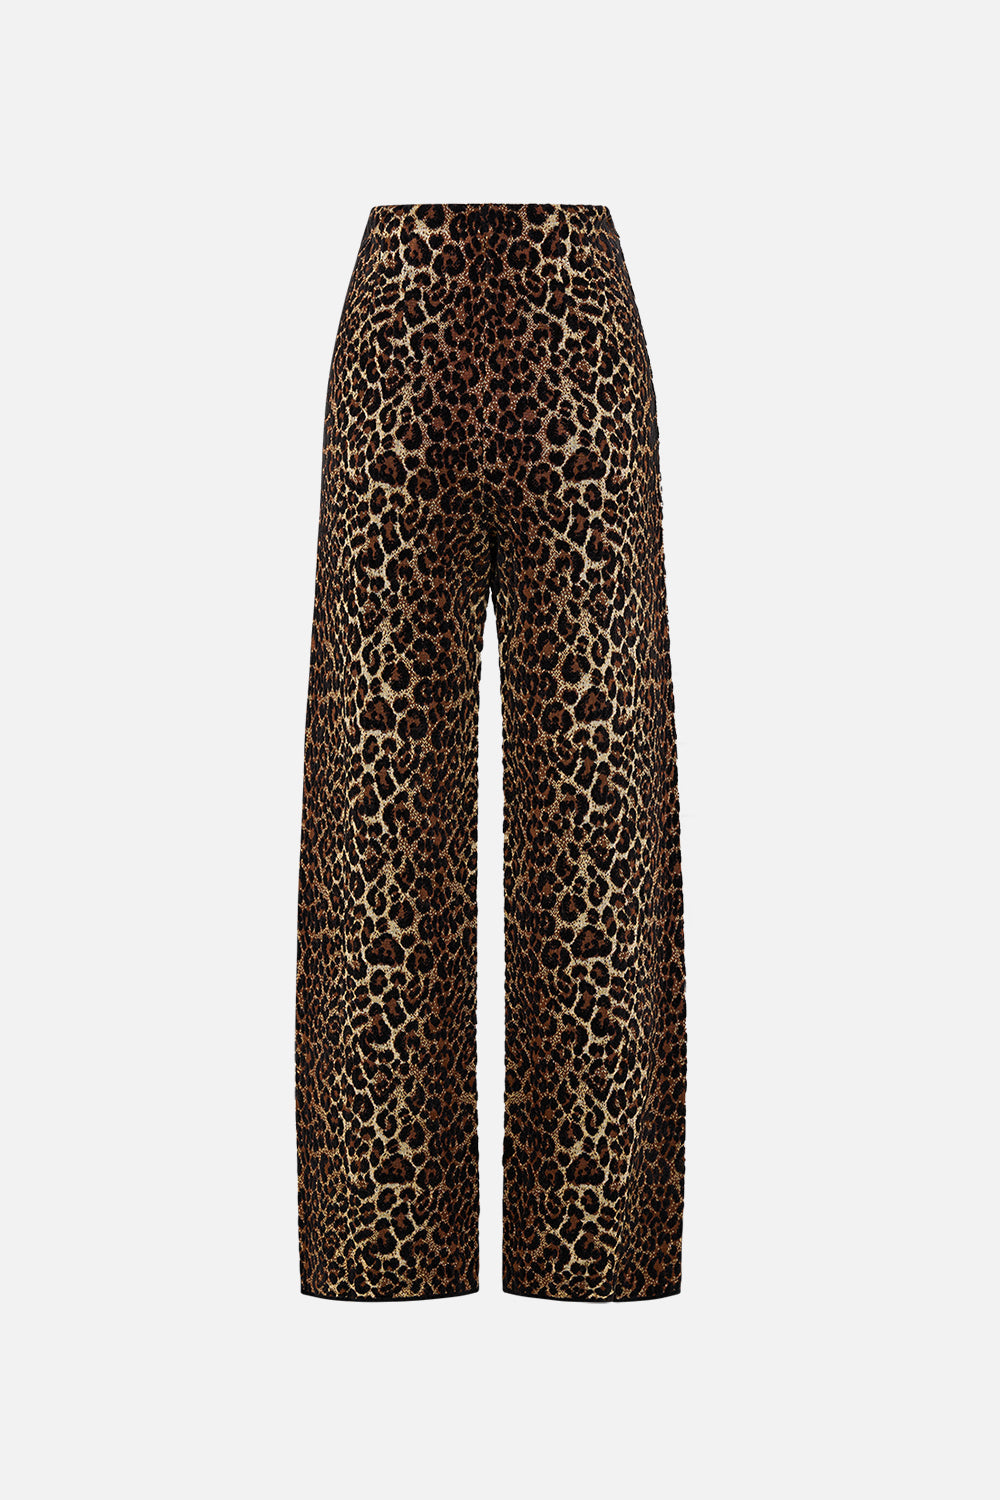 CAMILLA leopard jacquard straight leg knit pant in Amsterglam print.